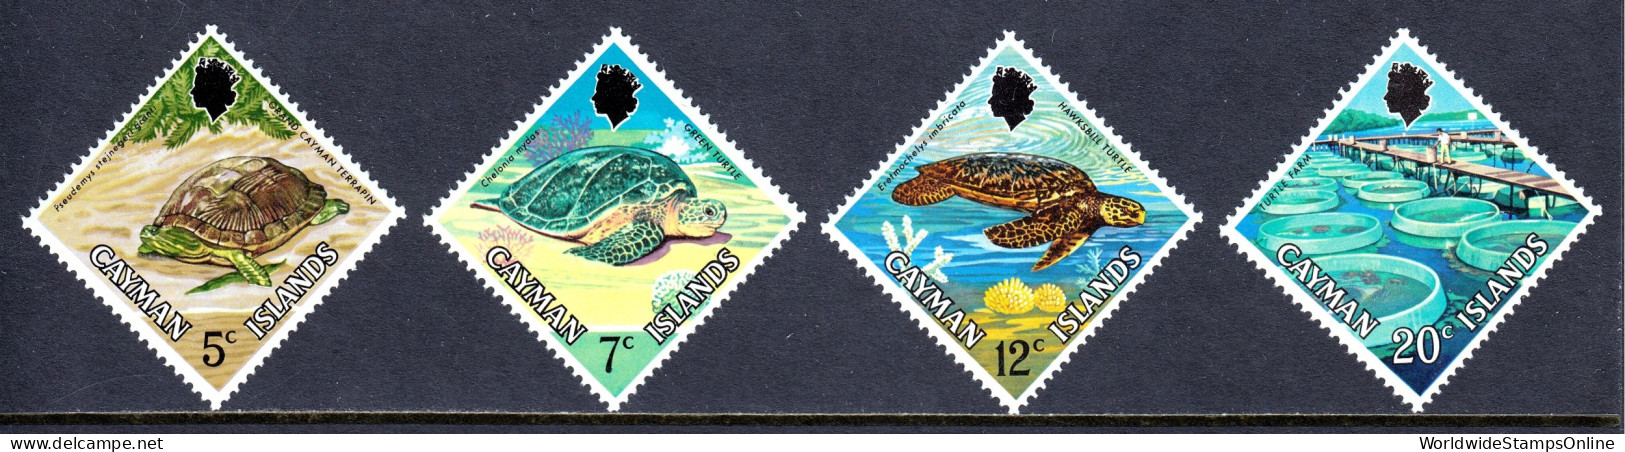 Cayman Islands - Scott #283-286 - MNH - SCV $6.30 - Iles Caïmans